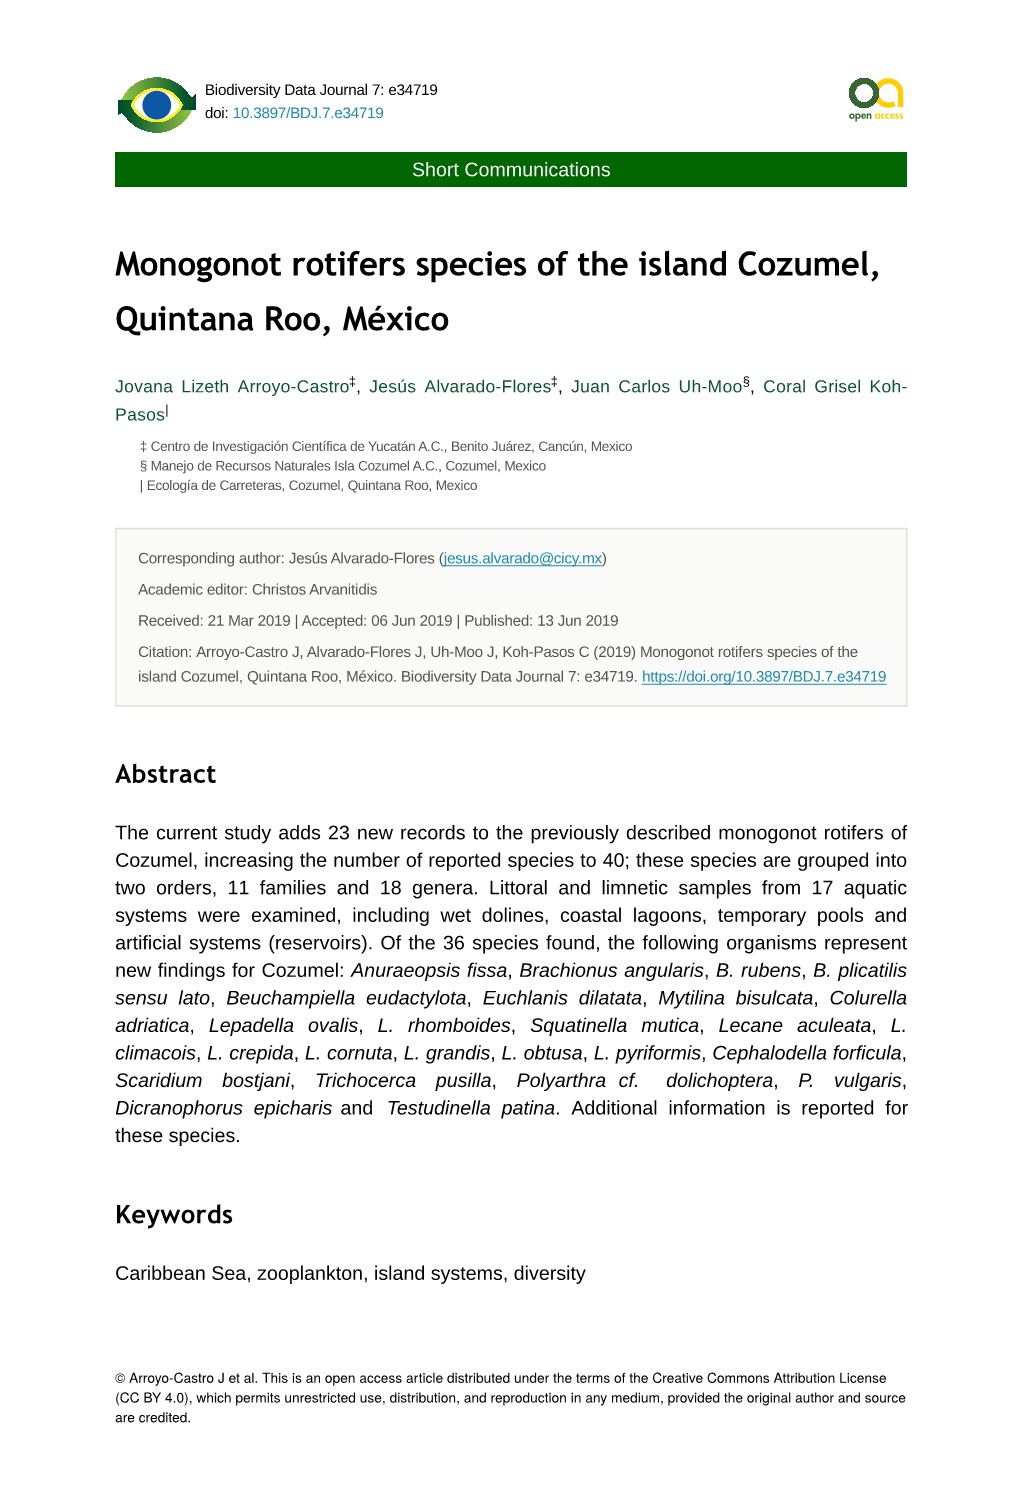 Monogonot Rotifers Species of the Island Cozumel, Quintana Roo, México